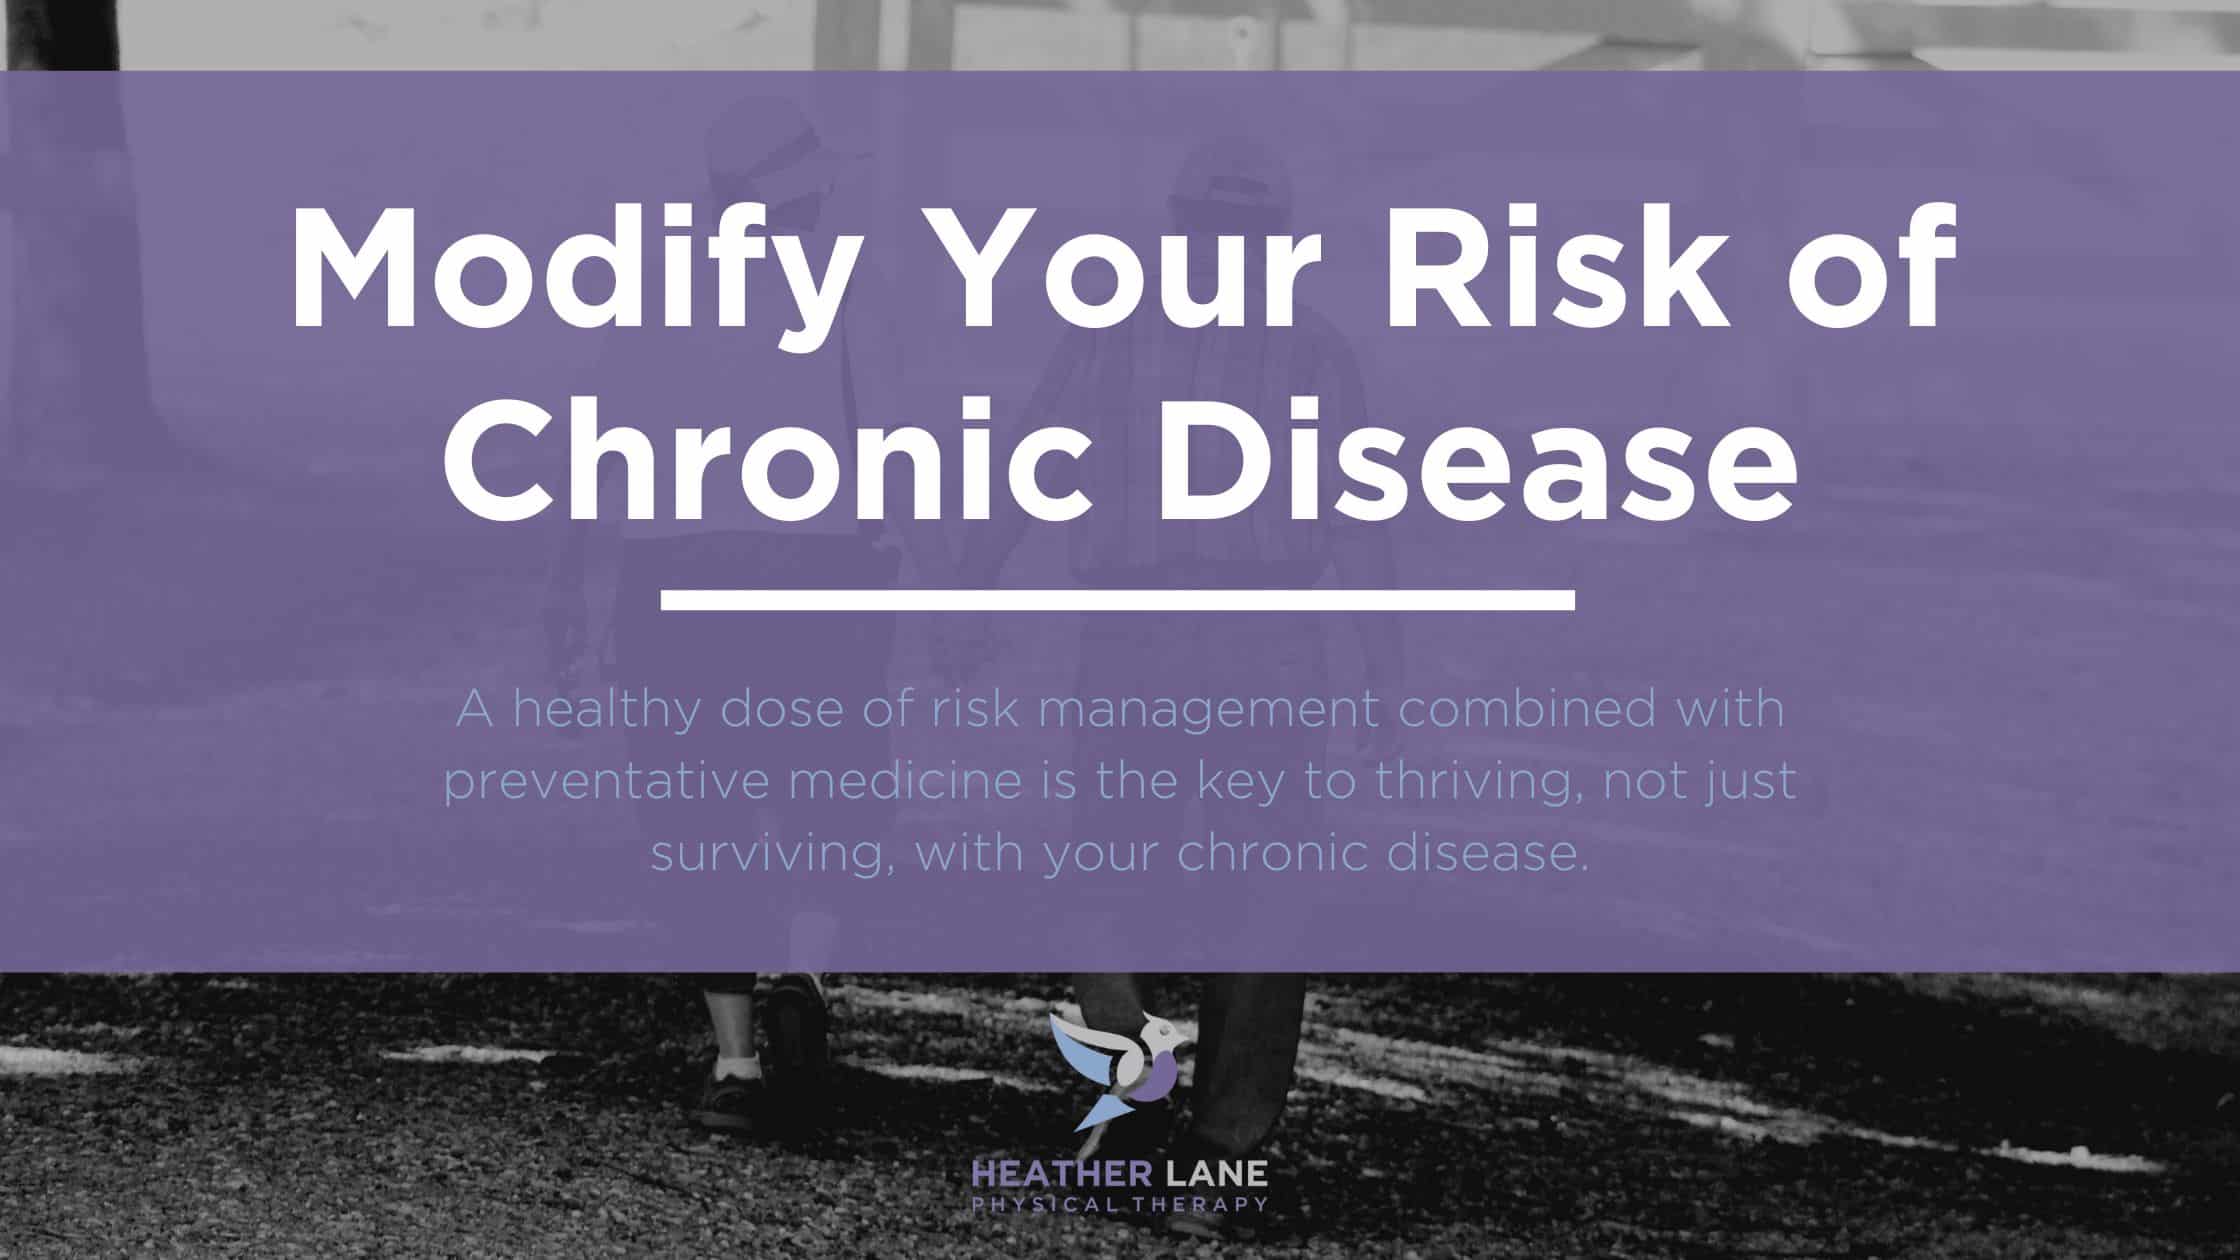 Modifying Your Risk of Chronic Disease